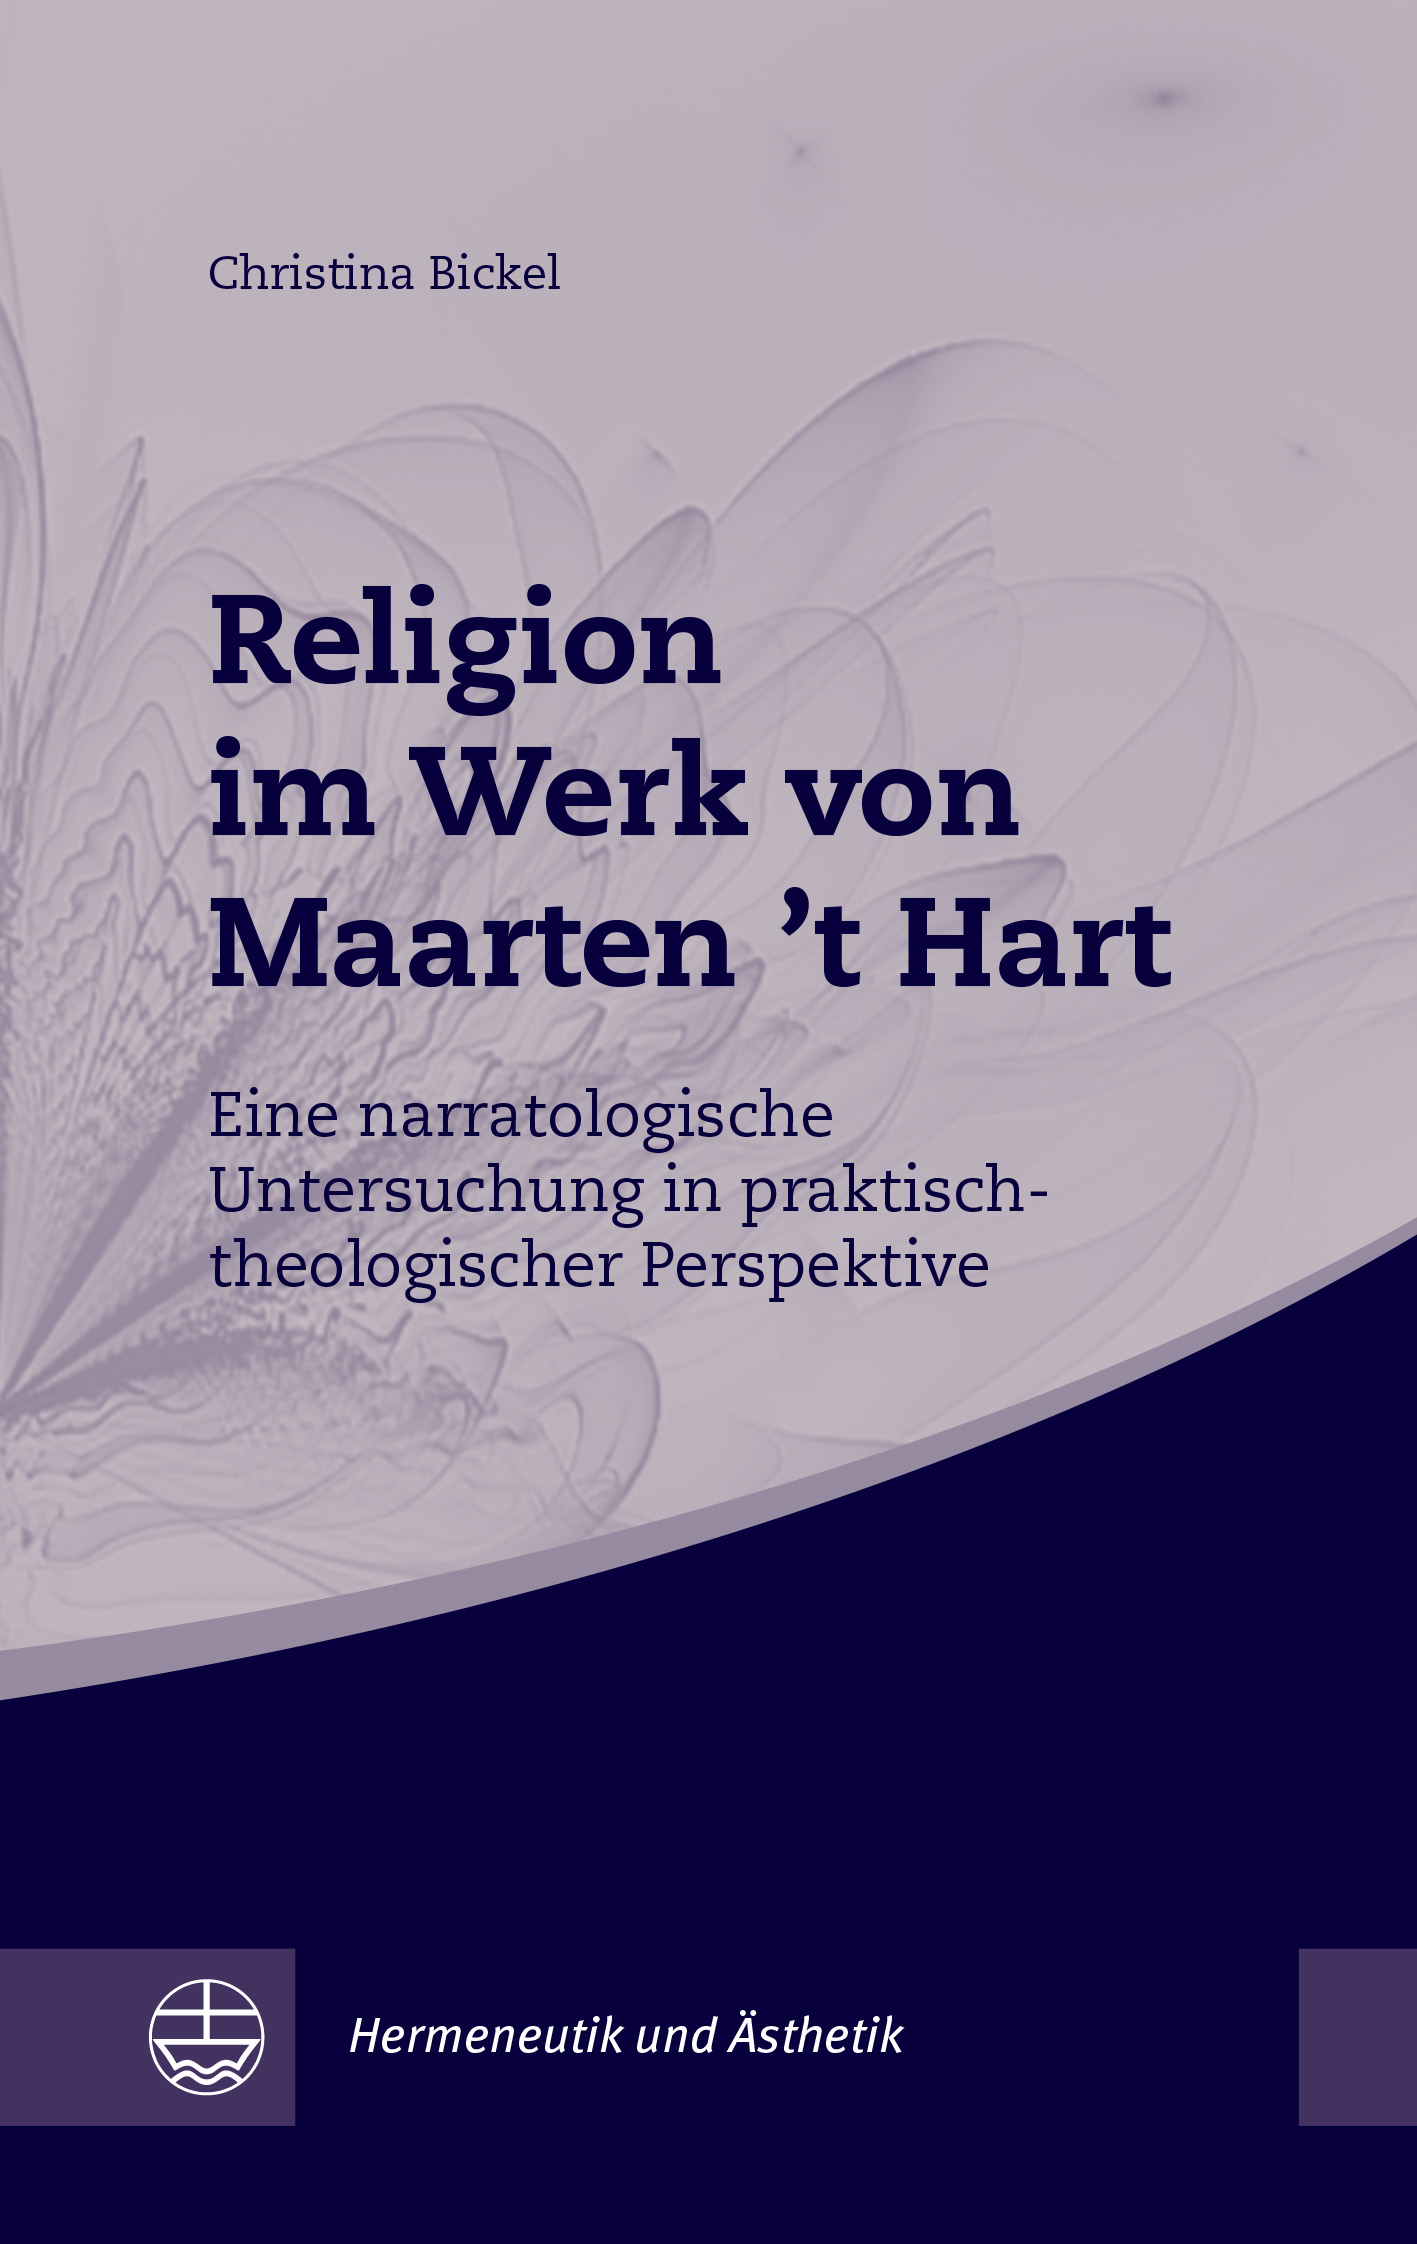 https://www.eva-leipzig.de/bilddownload/?image=06946HuAe_5_Bickel_Religion_im_Werk_von_Maarten_t-Hart.jpg